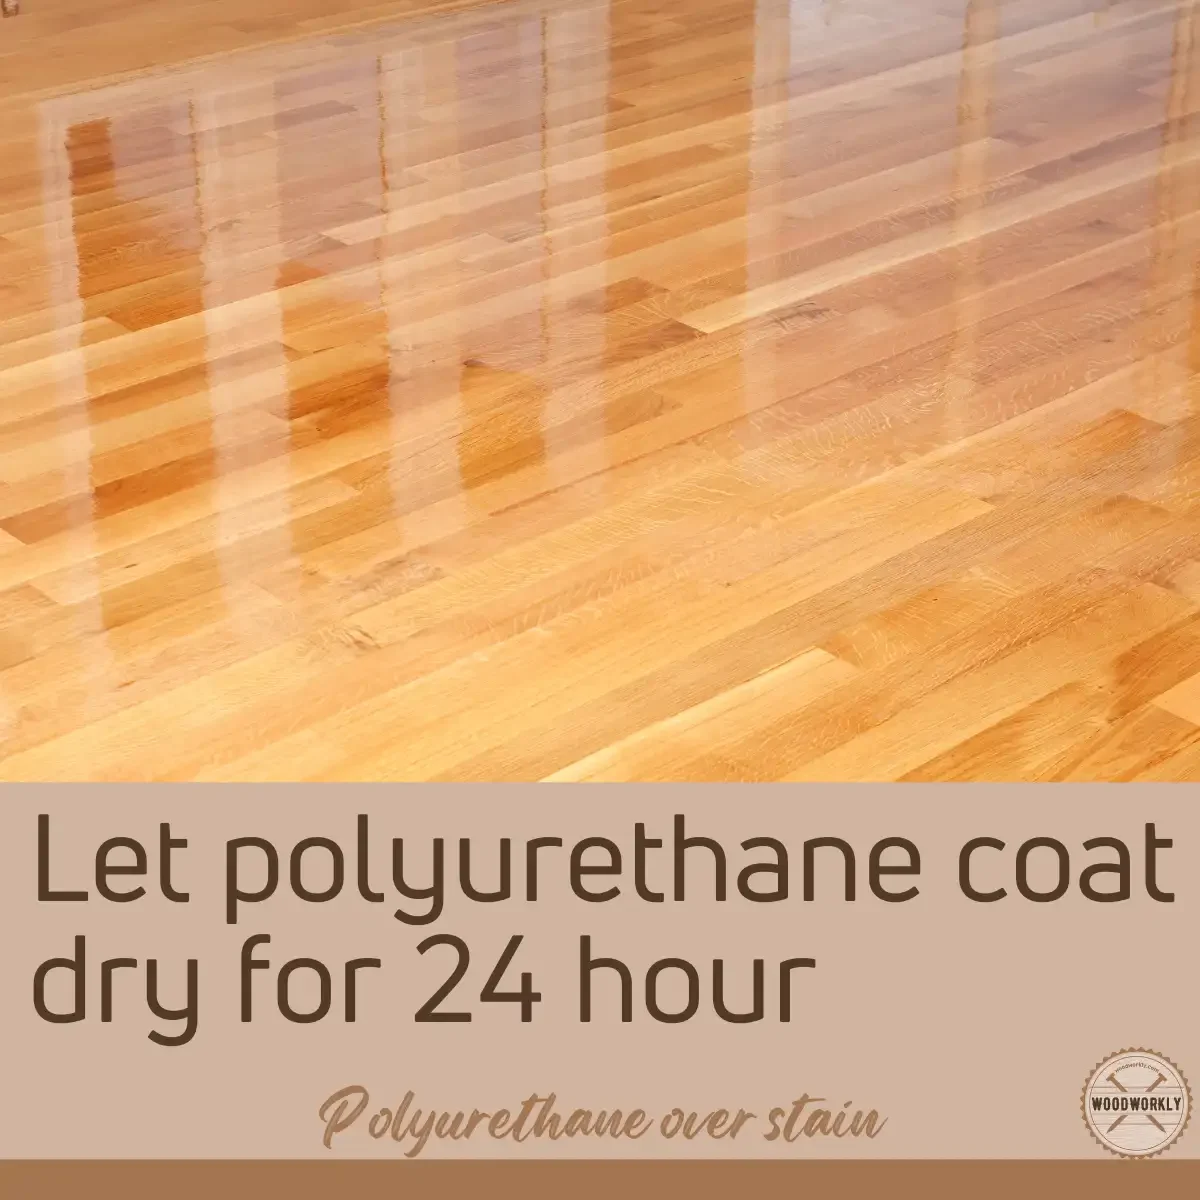 Let polyurethane coat dry for 24 hour